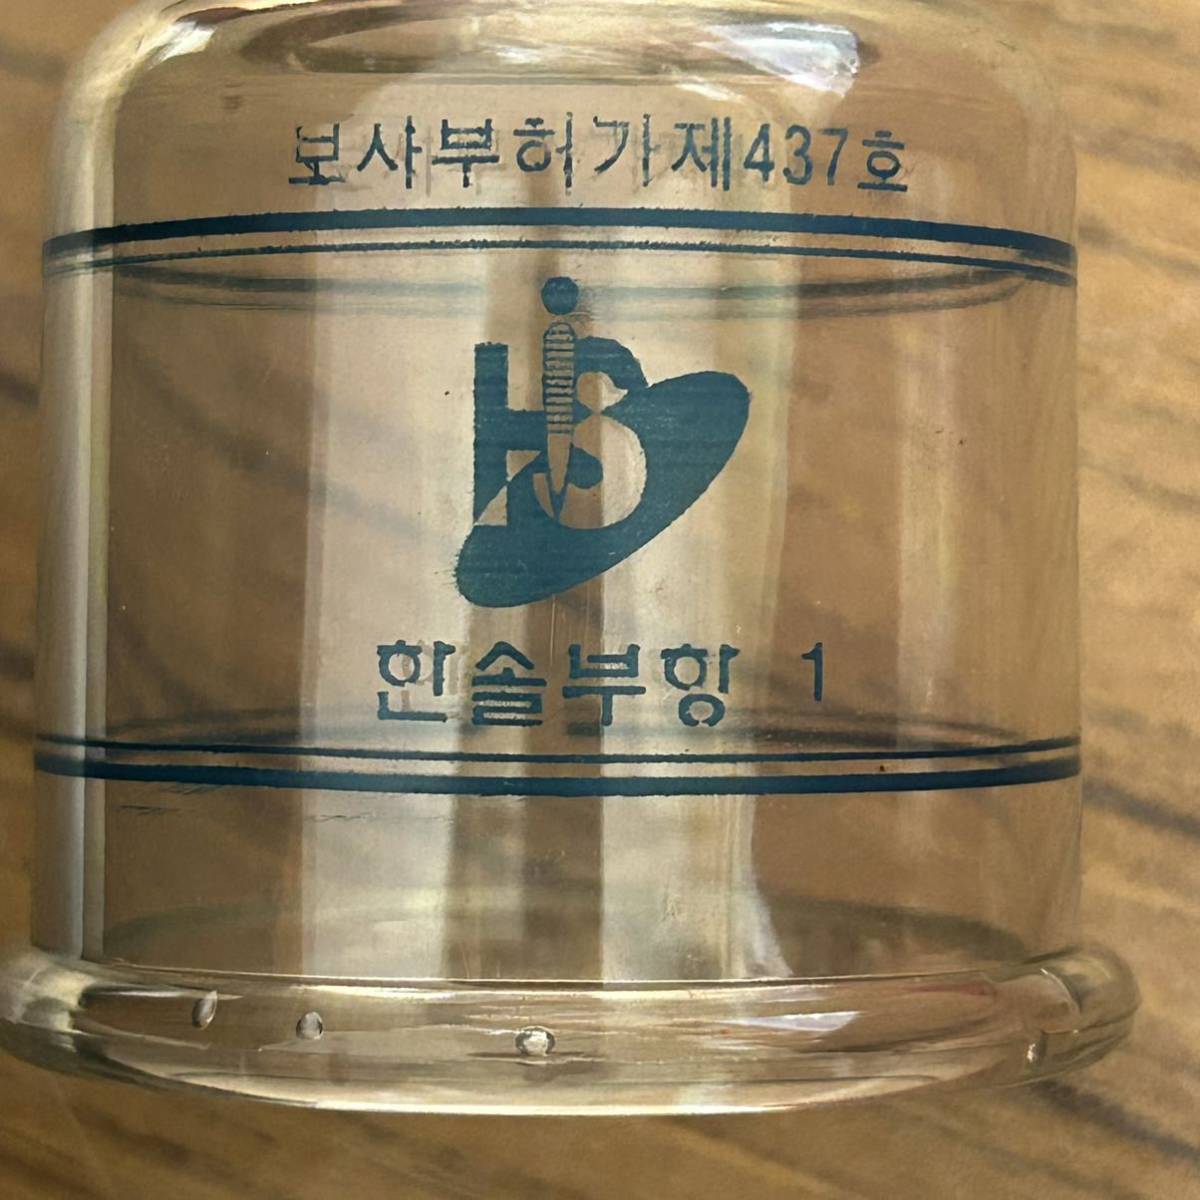 HS-A ハンソル 医療 韓国製 カッピング セット プハン 吸い玉 カップ ハンディケース 肩こり 腰痛 韓国 Korea 治療 _画像5